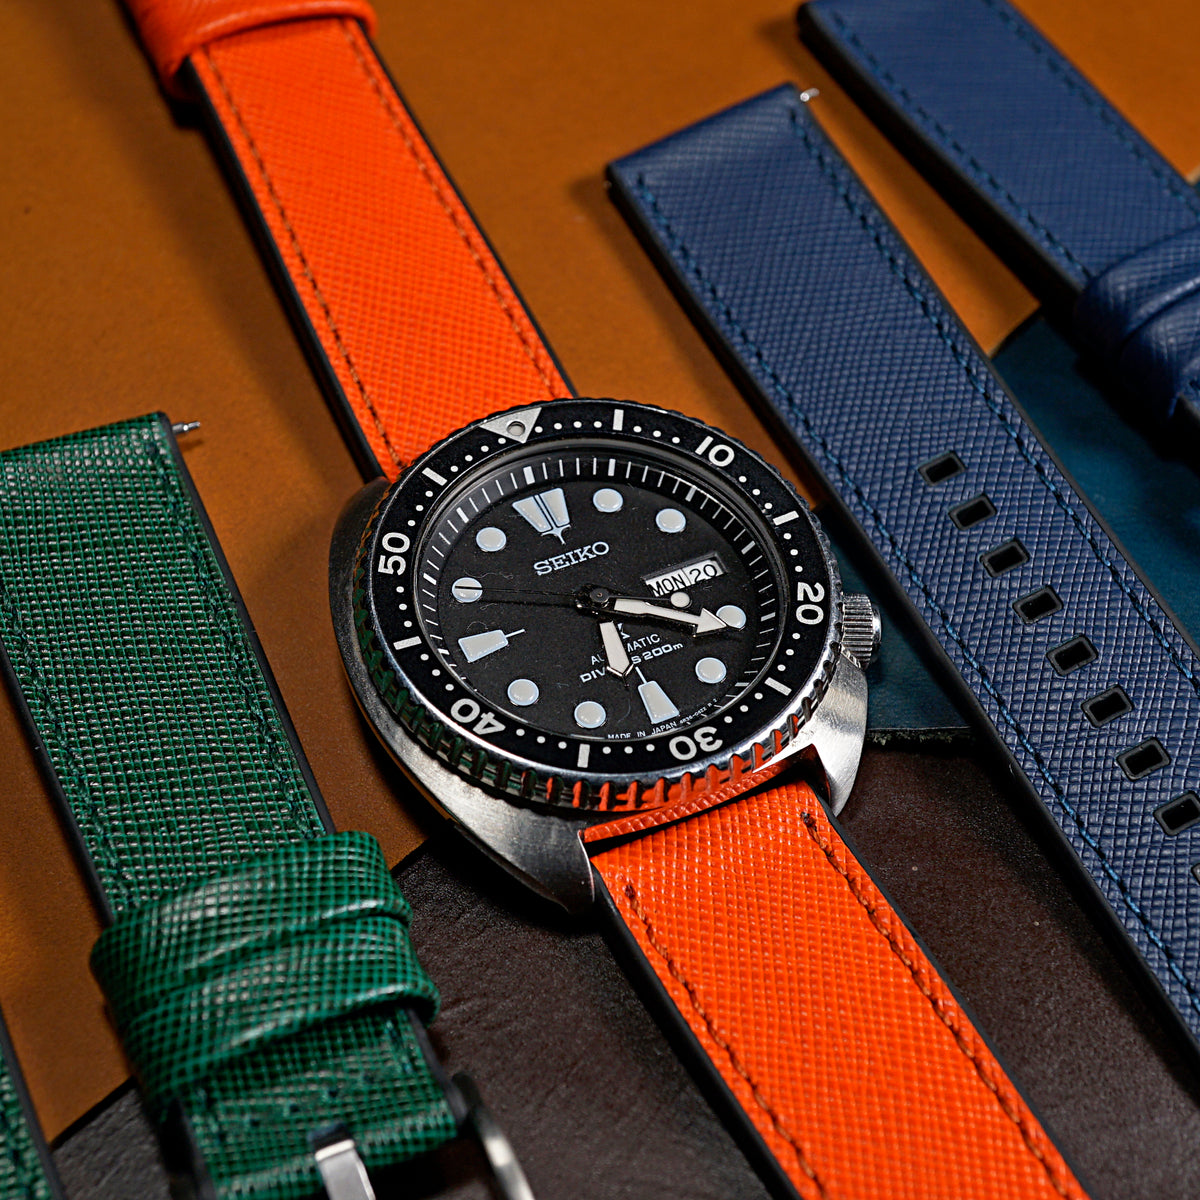 Performax Saffiano Leather FKM Rubber Hybrid Strap in Orange (20mm) - Nomad Watch Works SG